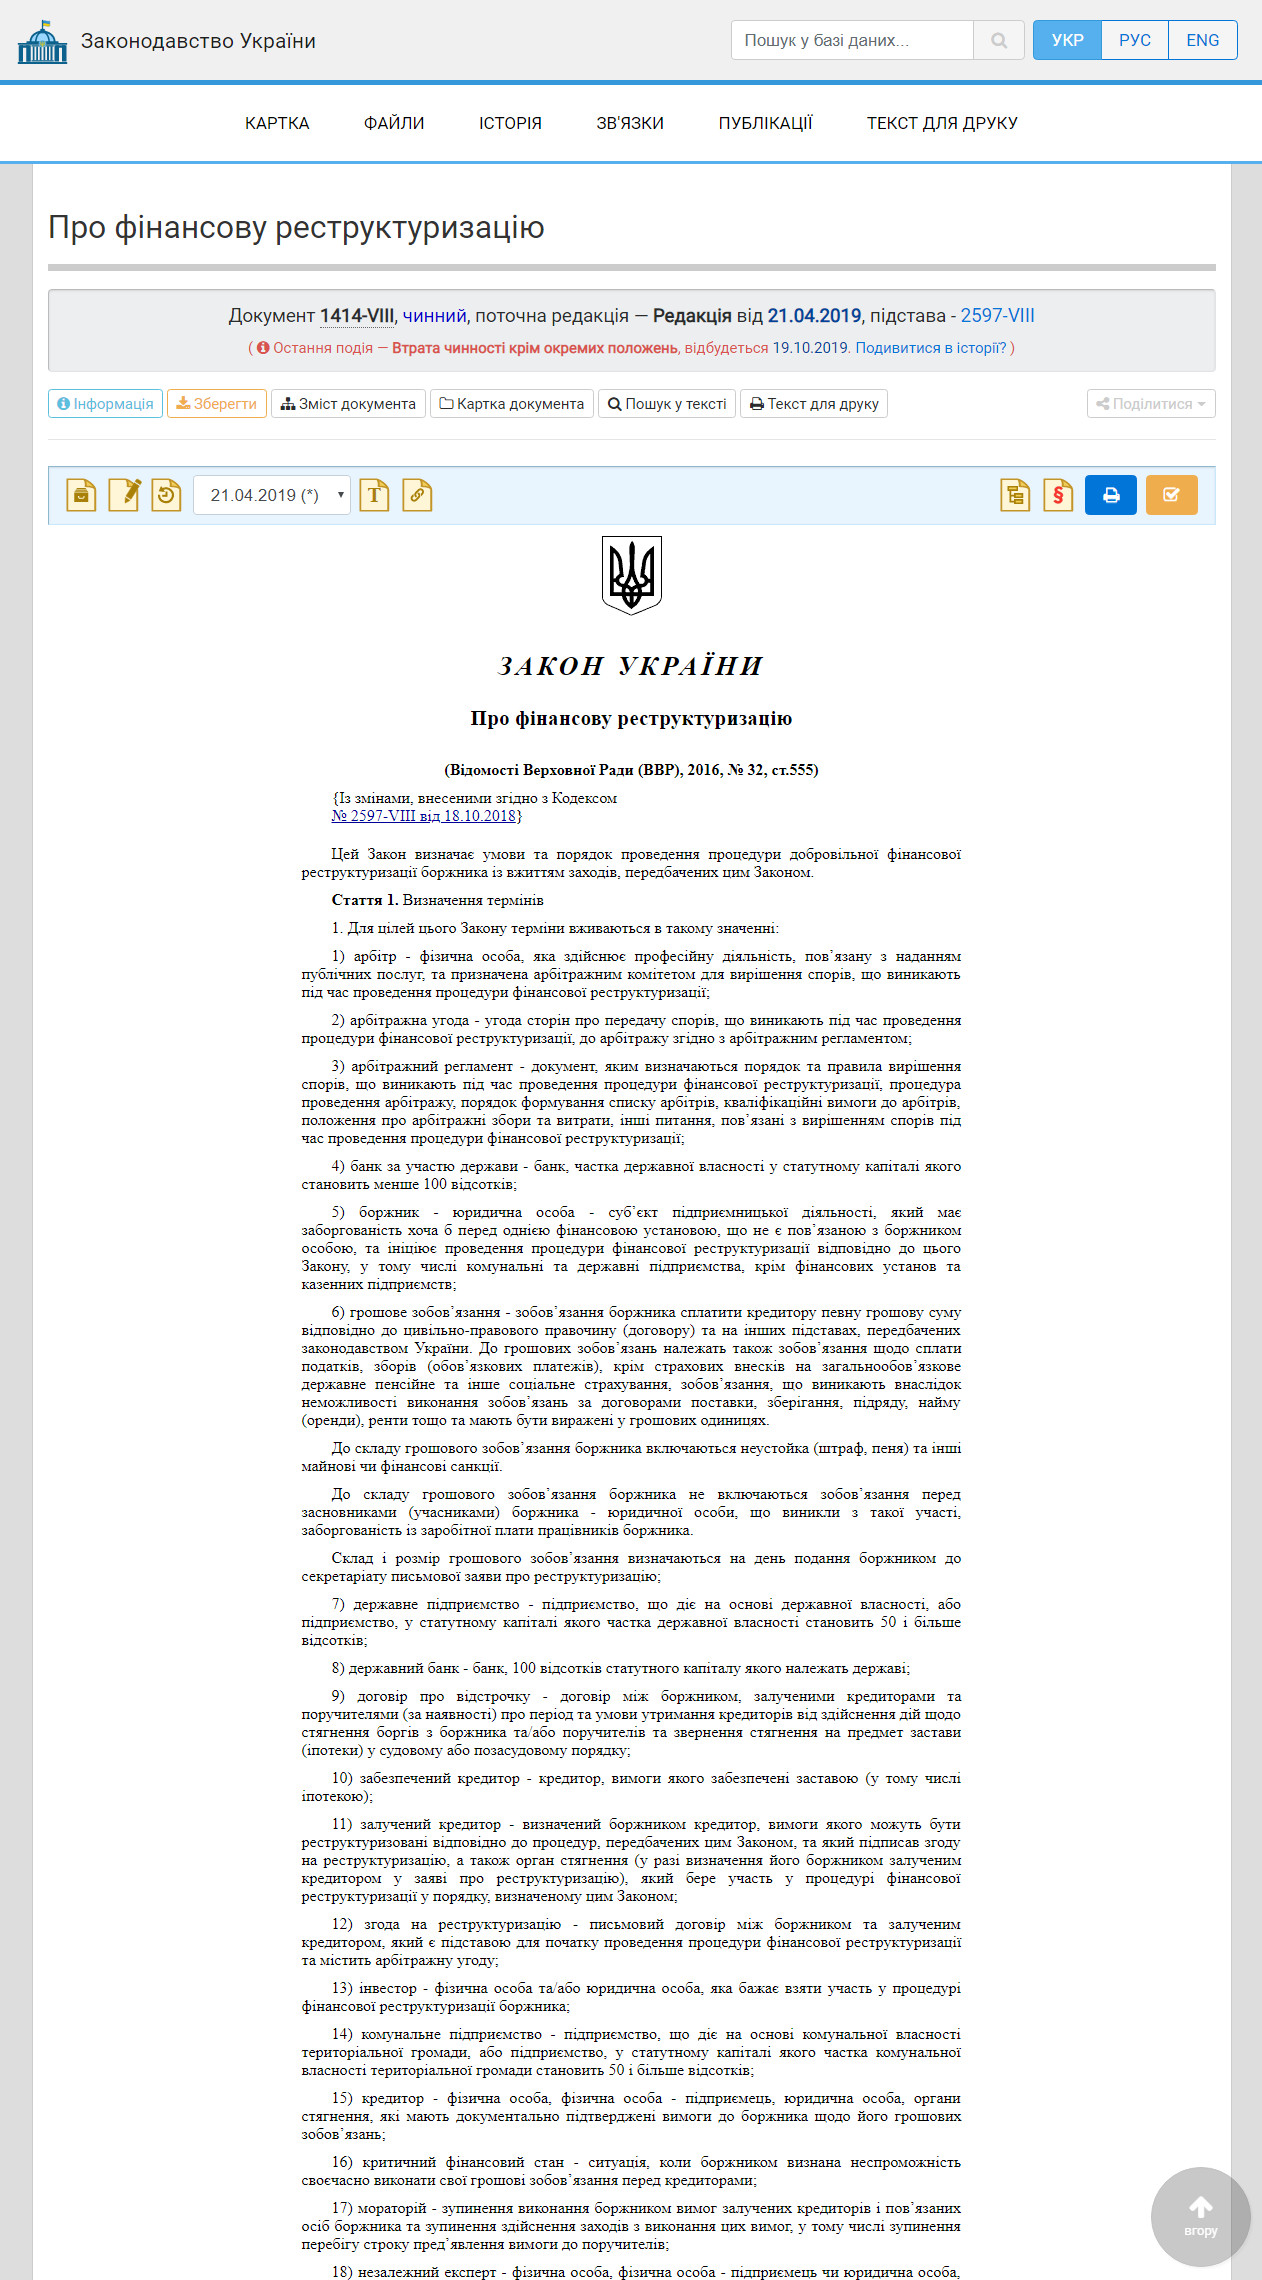 https://zakon.rada.gov.ua/laws/show/1414-19